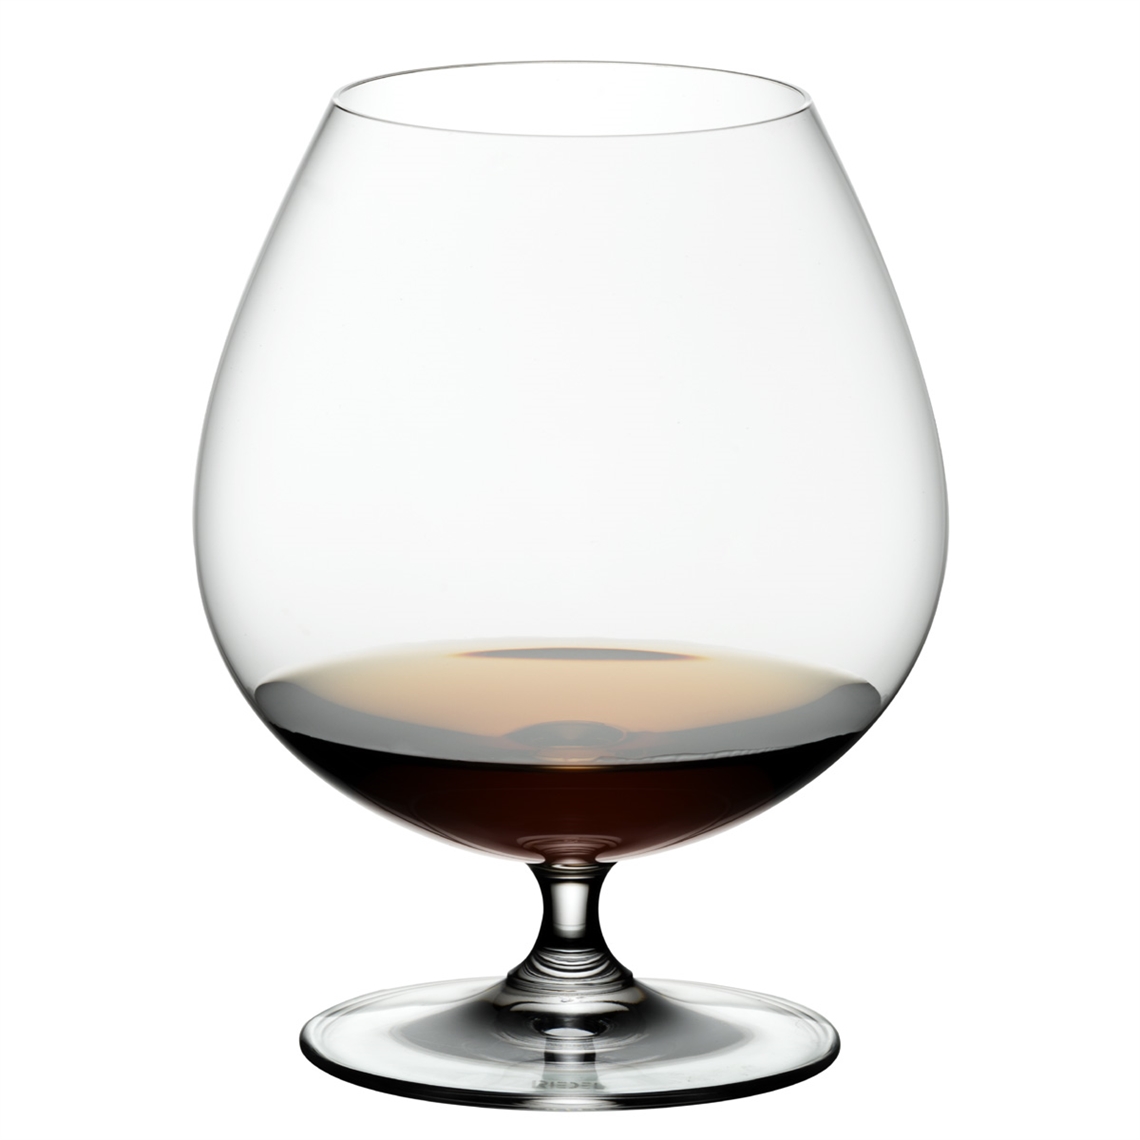 View more what makes iso wine tasting glasses so popular? from our Spirit Glasses range